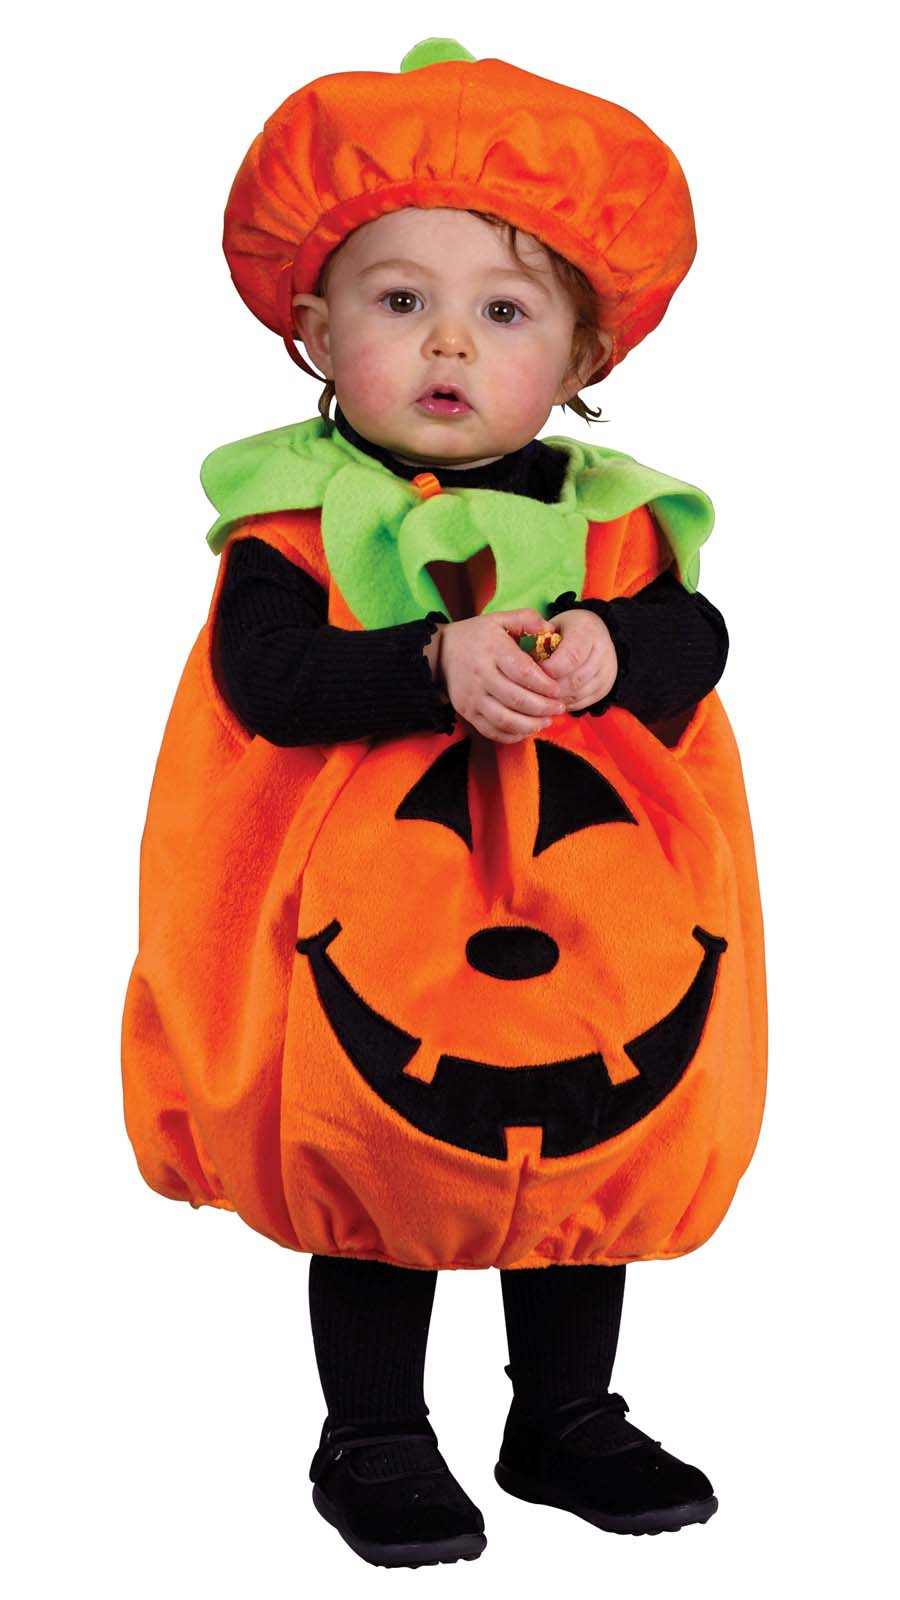 DIY Pumpkin Costume Toddler
 Cutie Pie Pumpkin Costume Infant Toddler Cute 12 24 months